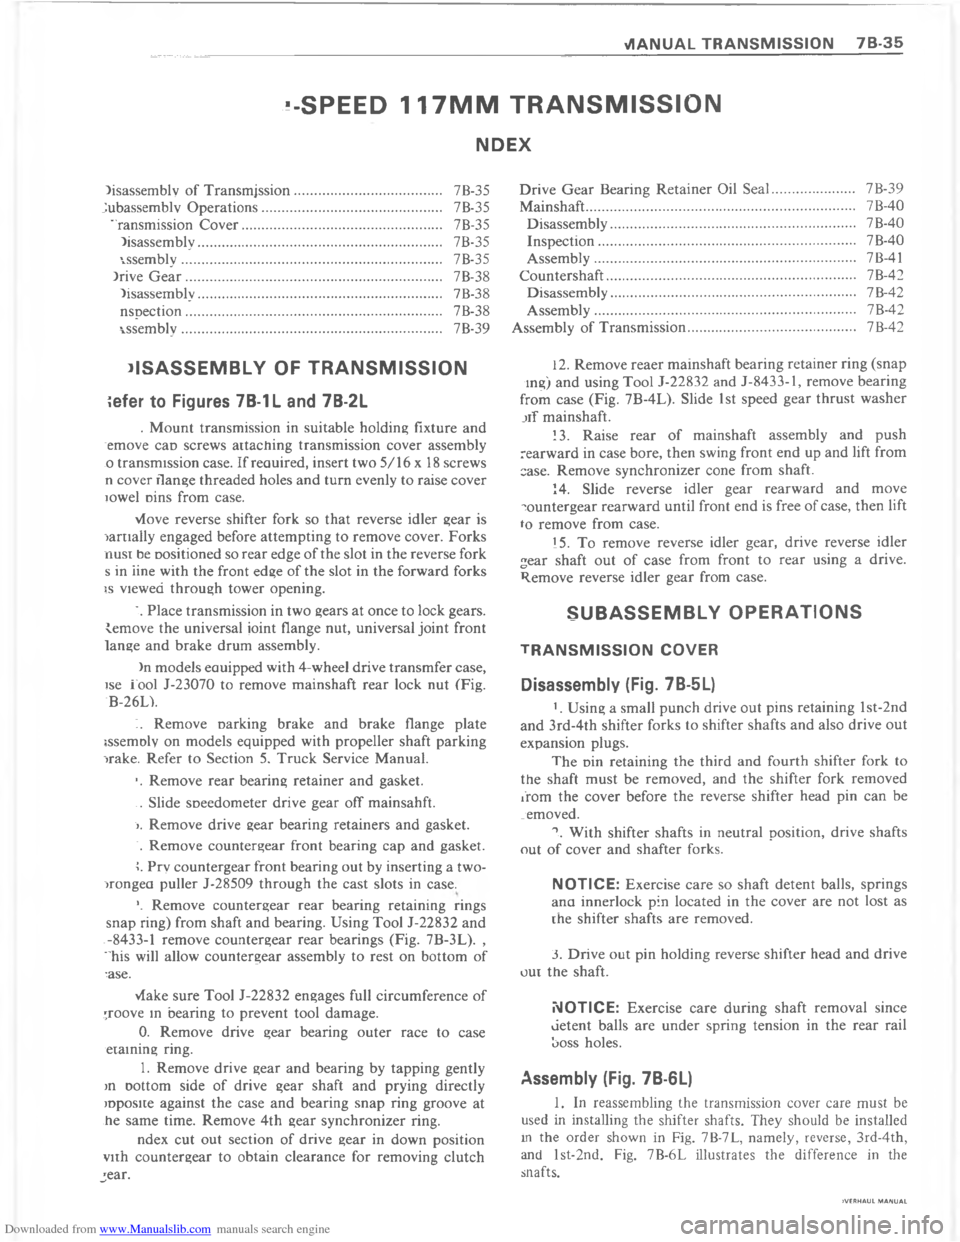 CHEVROLET MALIBU 1980 4.G Workshop Manual Downloaded from www.Manualslib.com manuals search engine        	           A    @?   A    	         

9999A

9A
	
9A

9A
%%-
9A
/$1-
9A

9A
\(%.
99